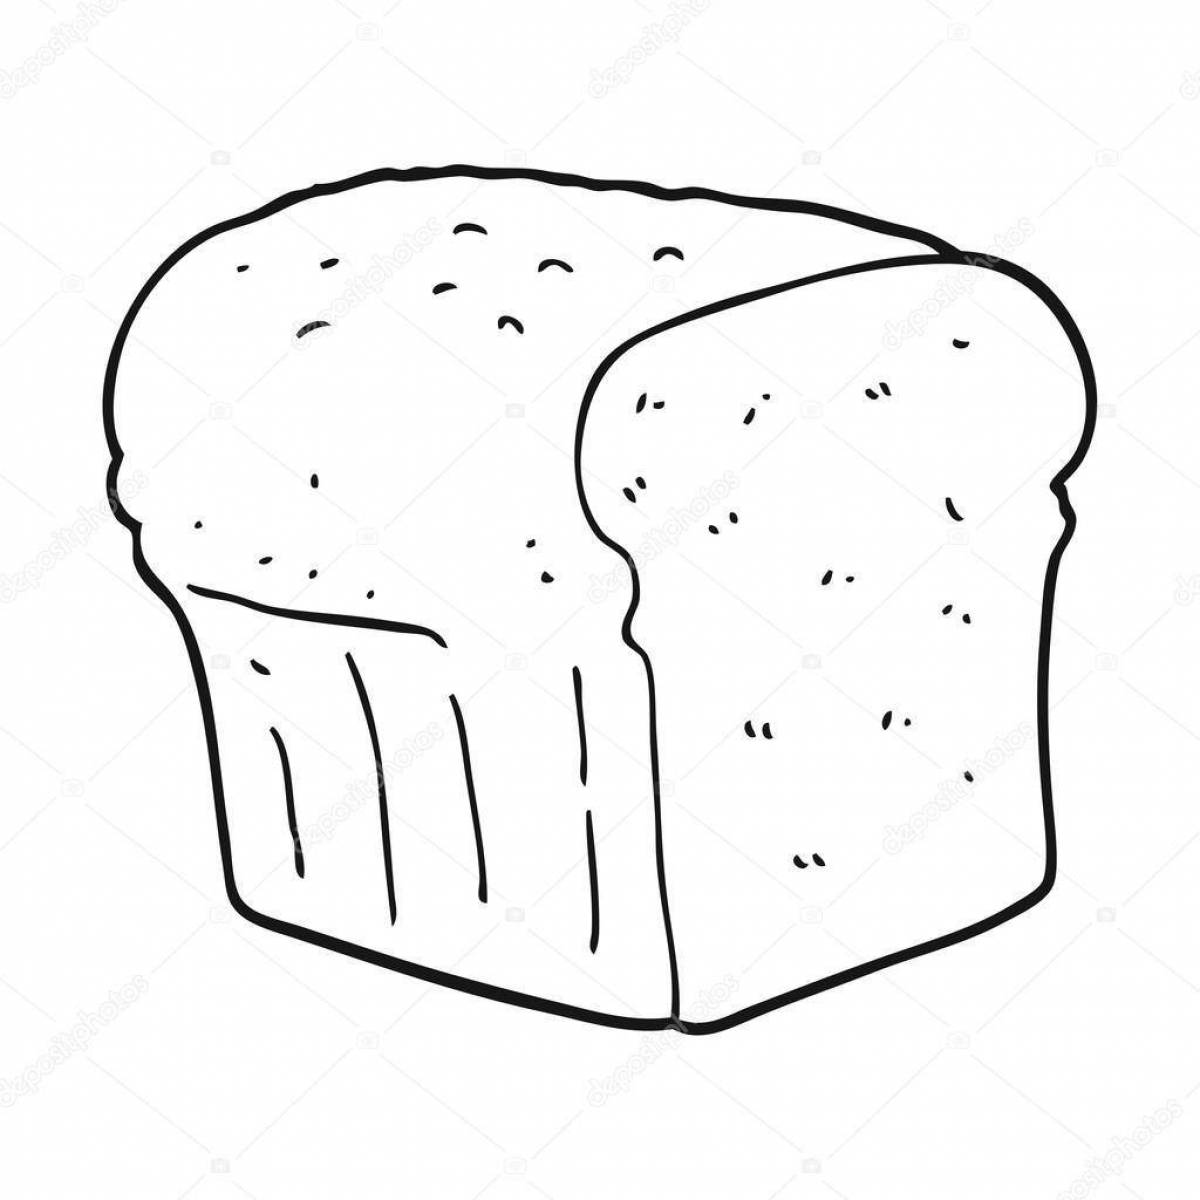 Масляная раскраска кусочек хлеба